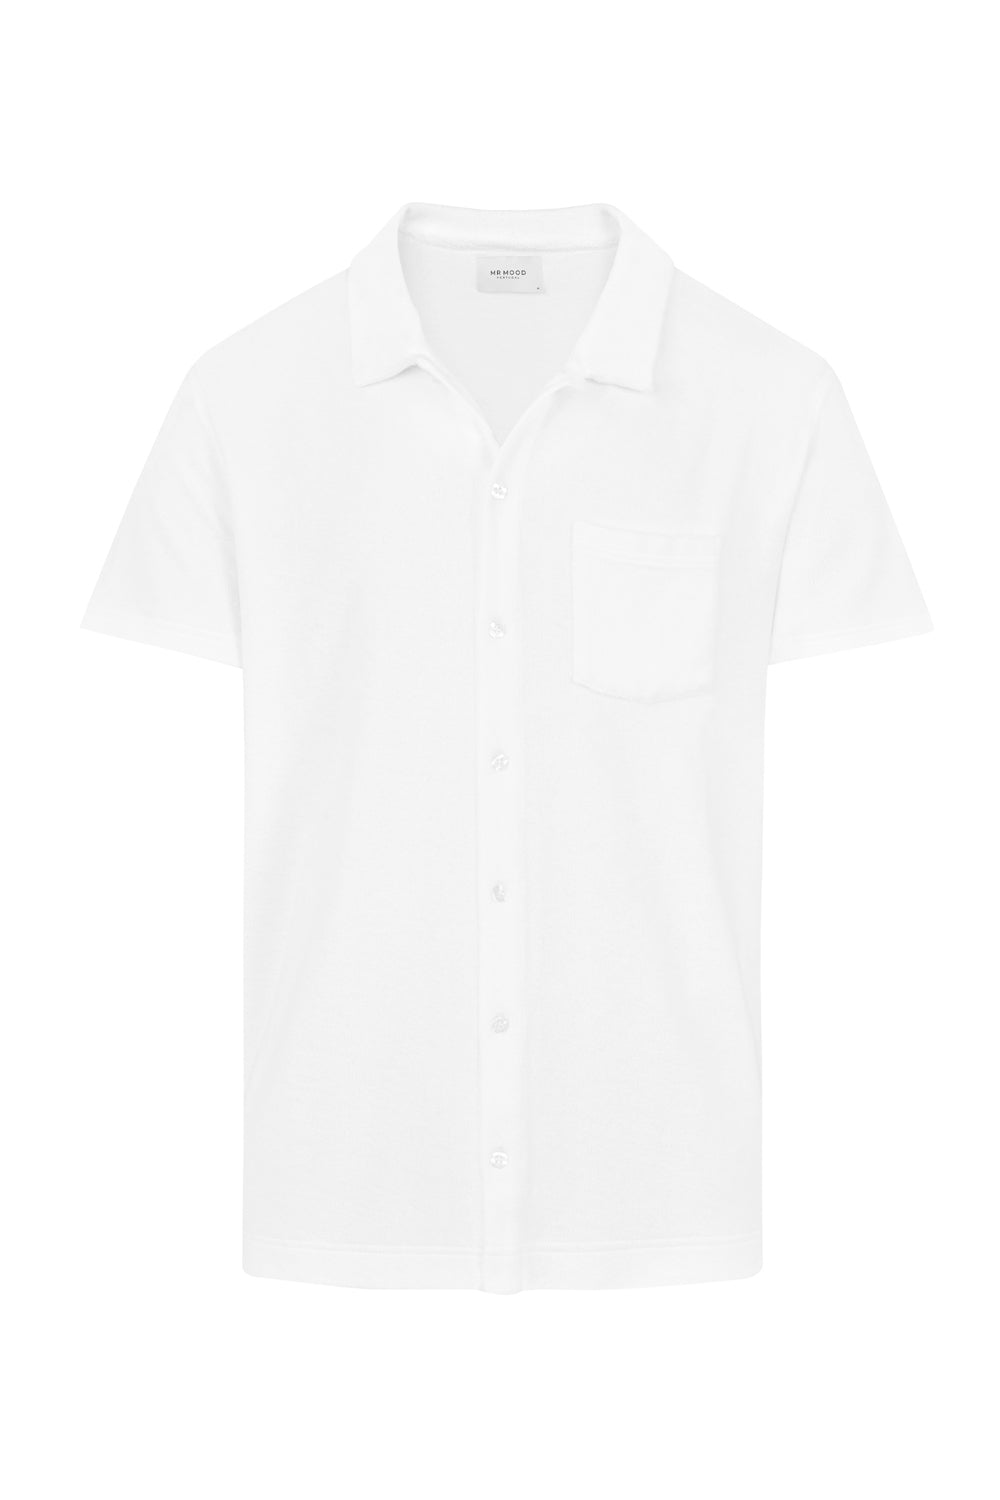 Mr Oscar TW Shirt White